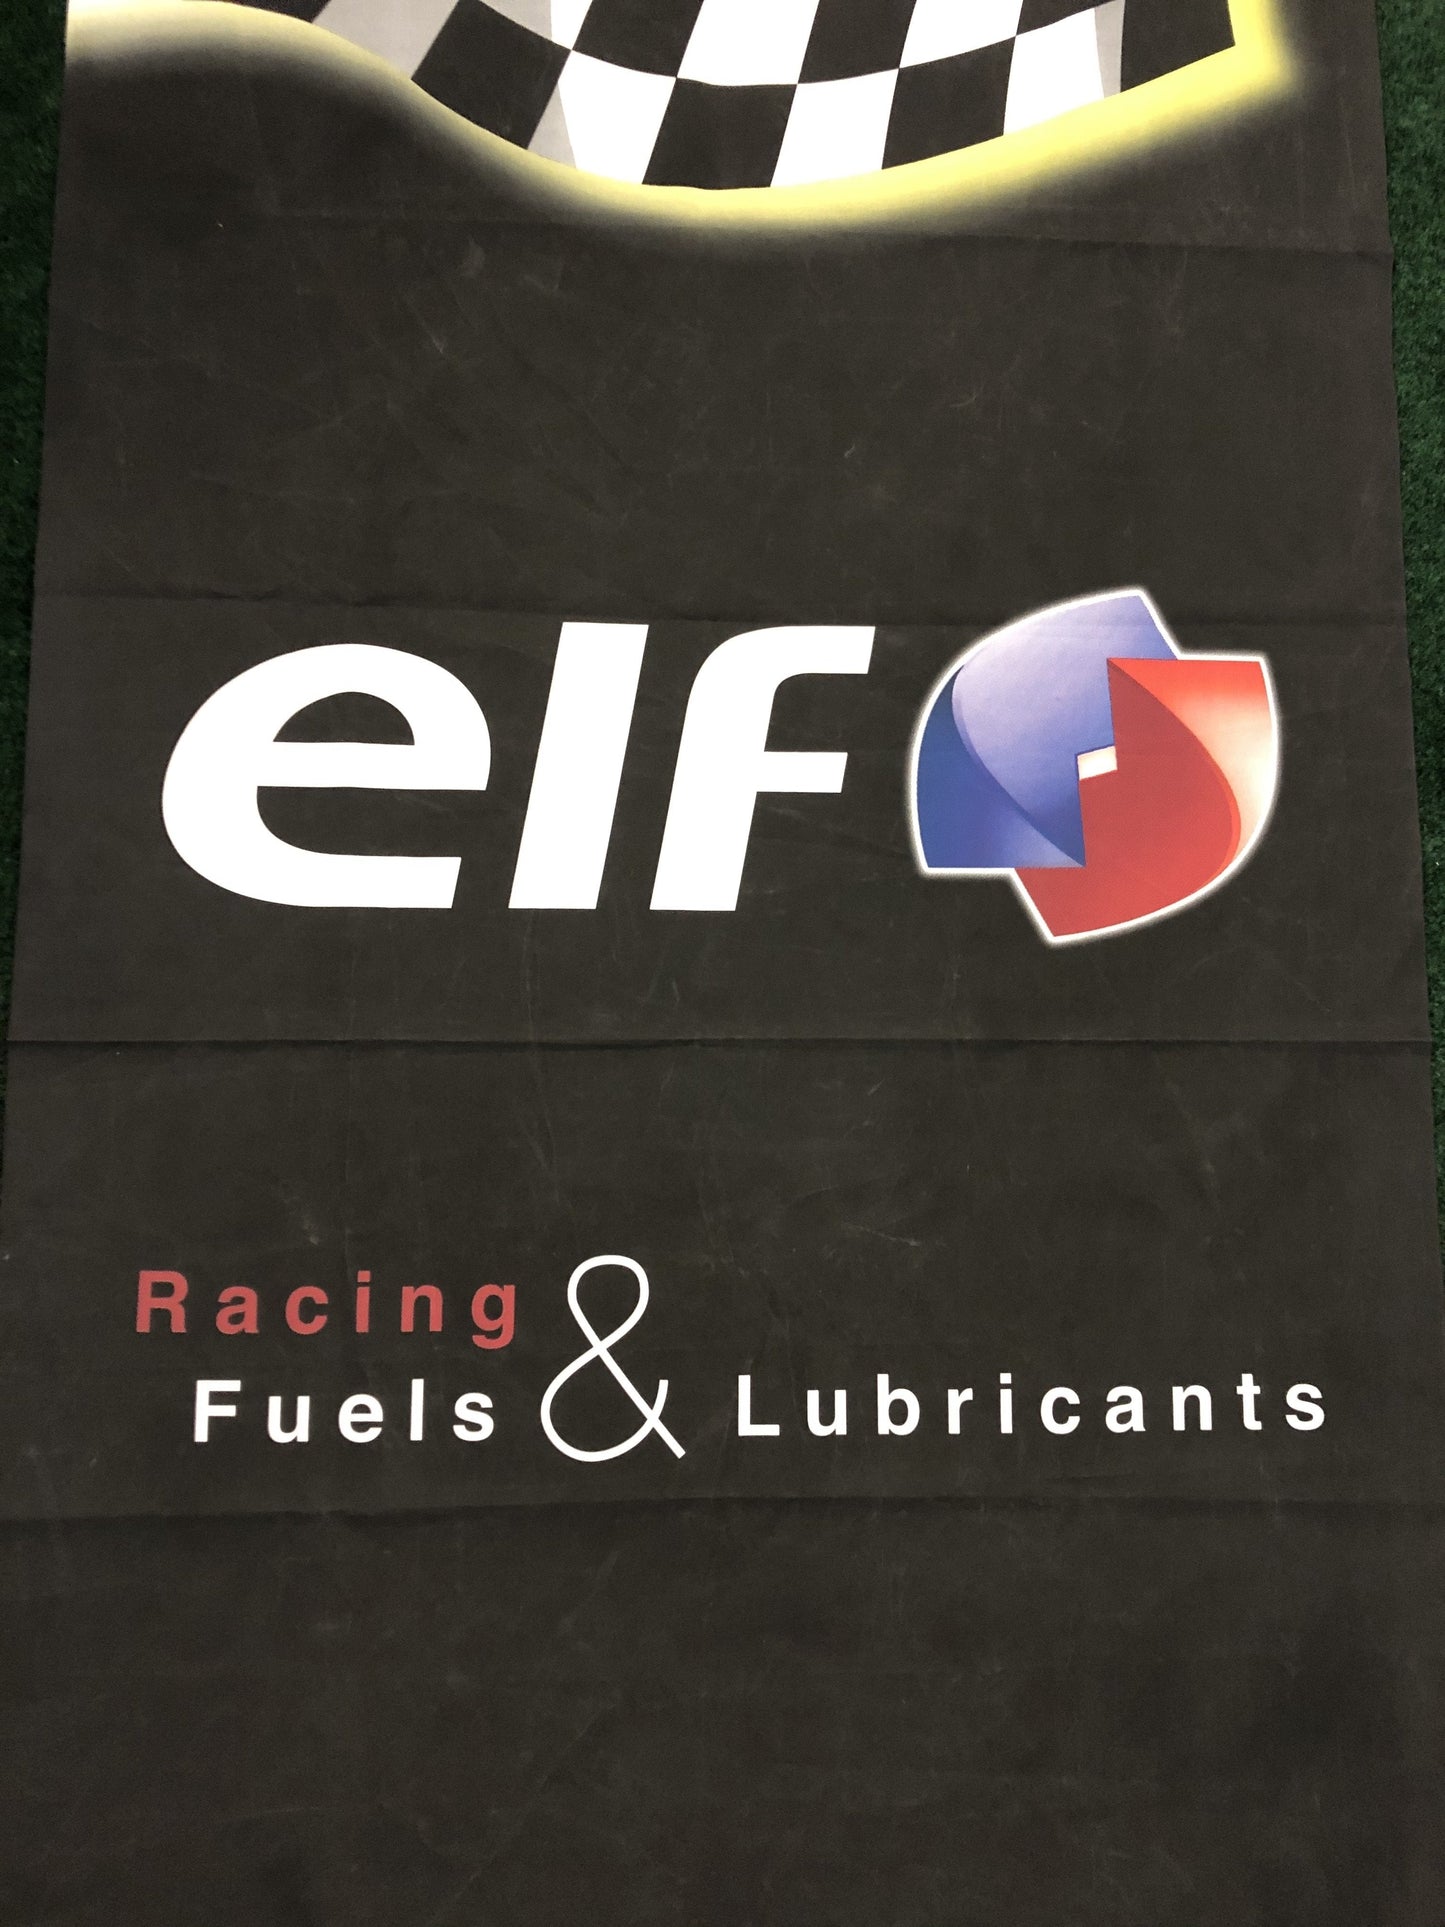 ELF - Racing Fuels & Lubricants Large Wall Nobori Style Banner